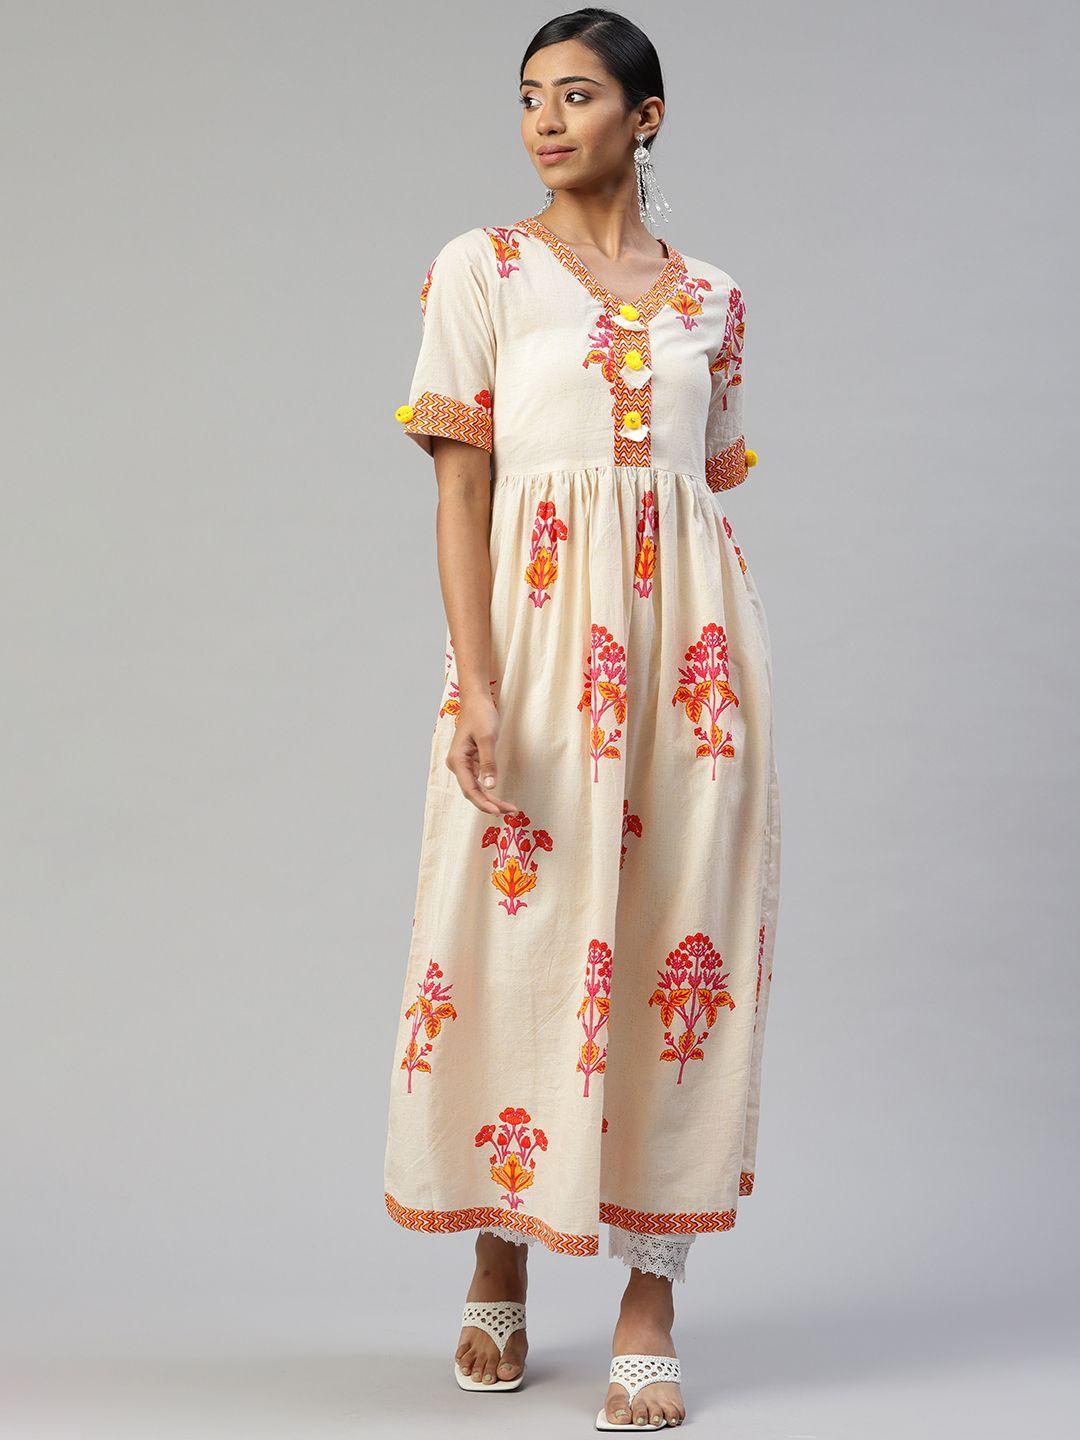 svarchi women off white & pink pure cotton ethnic motifs printed a-line kurta